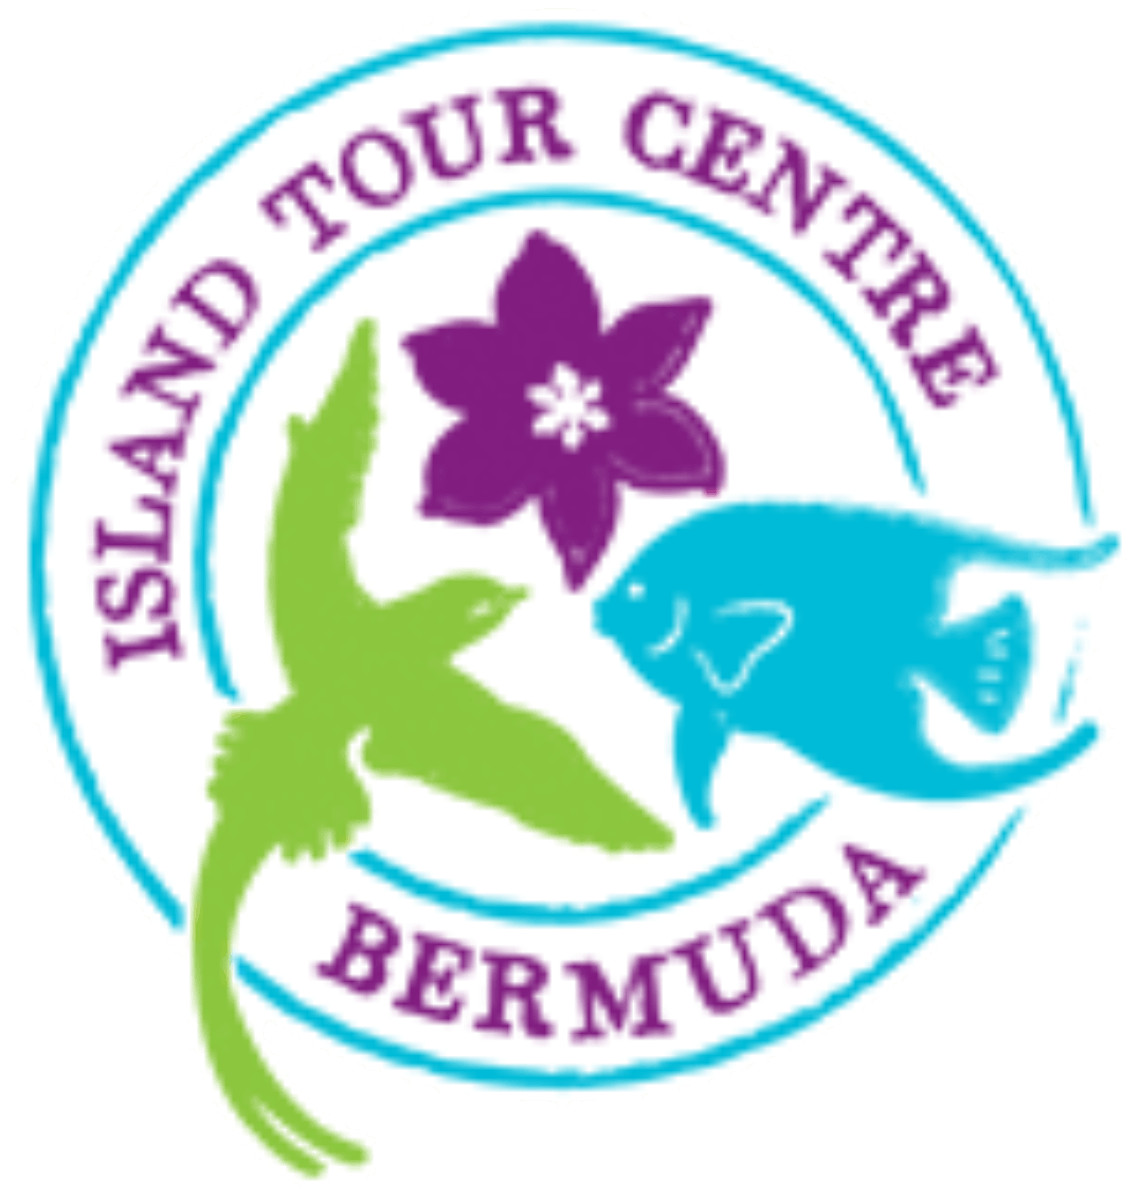 island tour centre bermuda